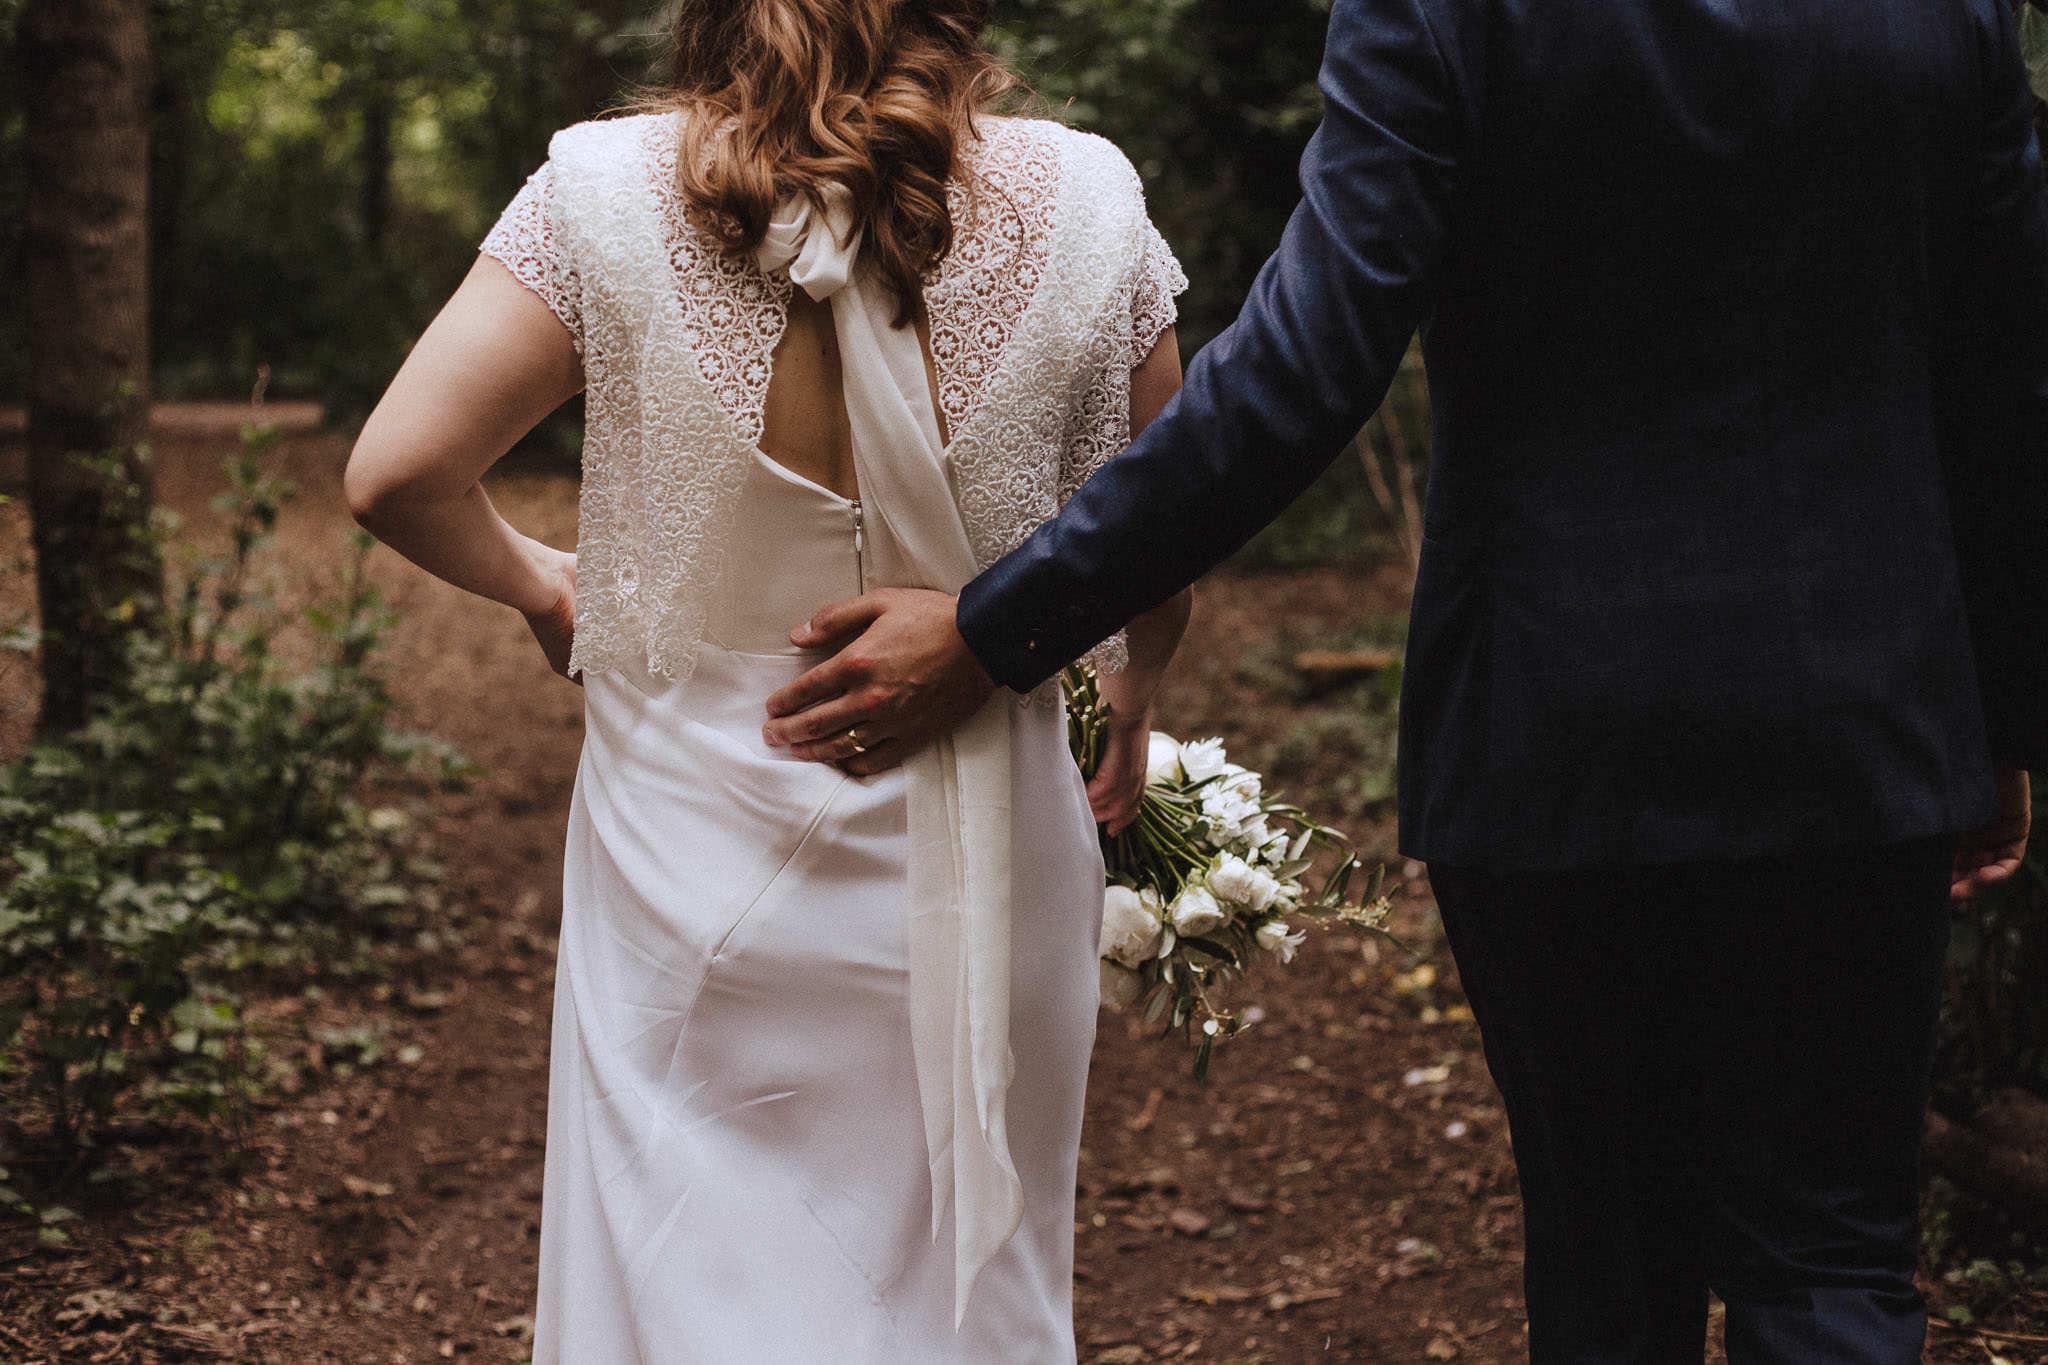 intimate details of wedding dress